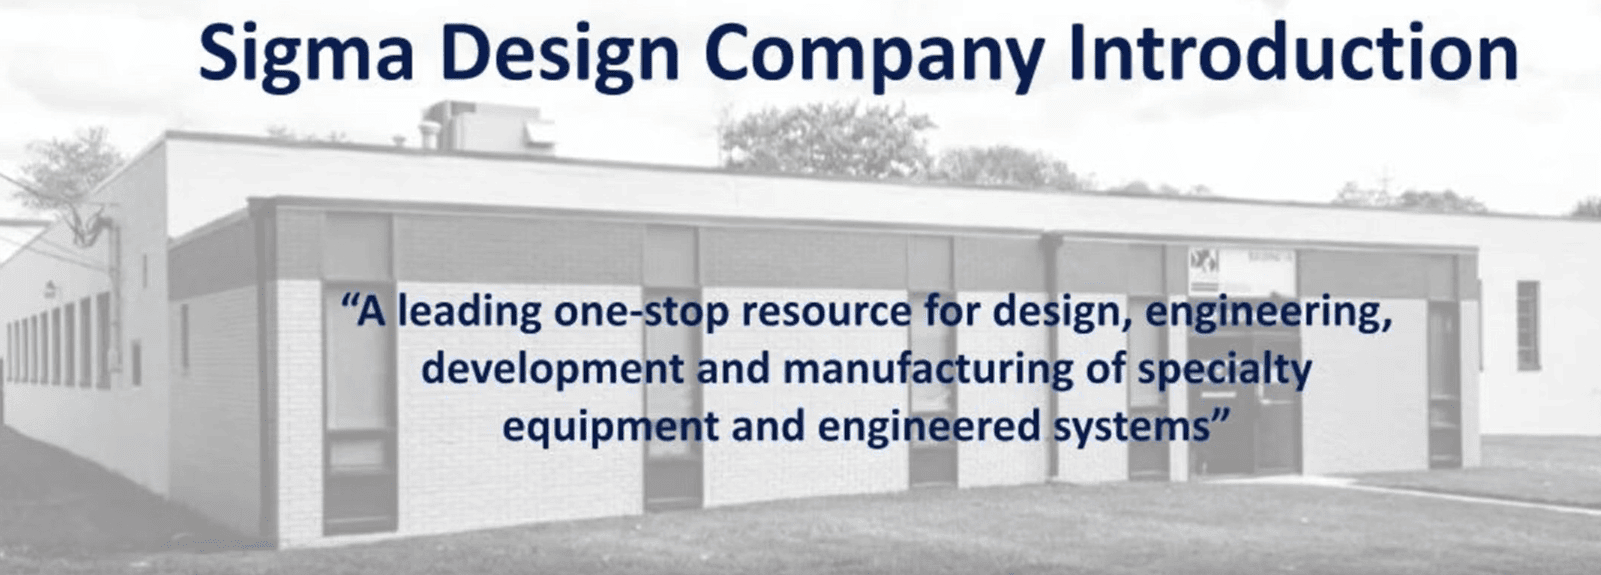 Sigma Design Company Introduction